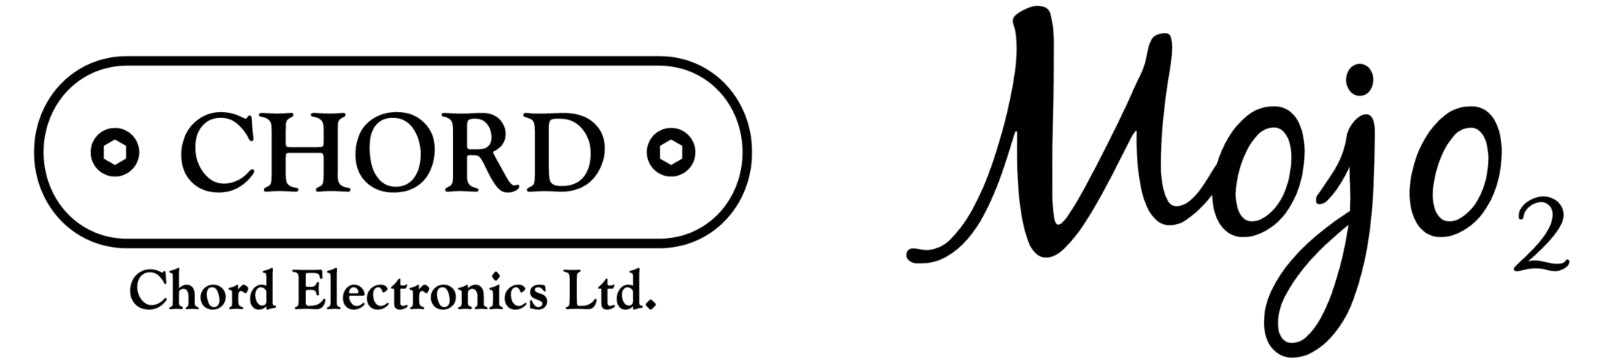 Chord Electronics and Mojo 2 logo